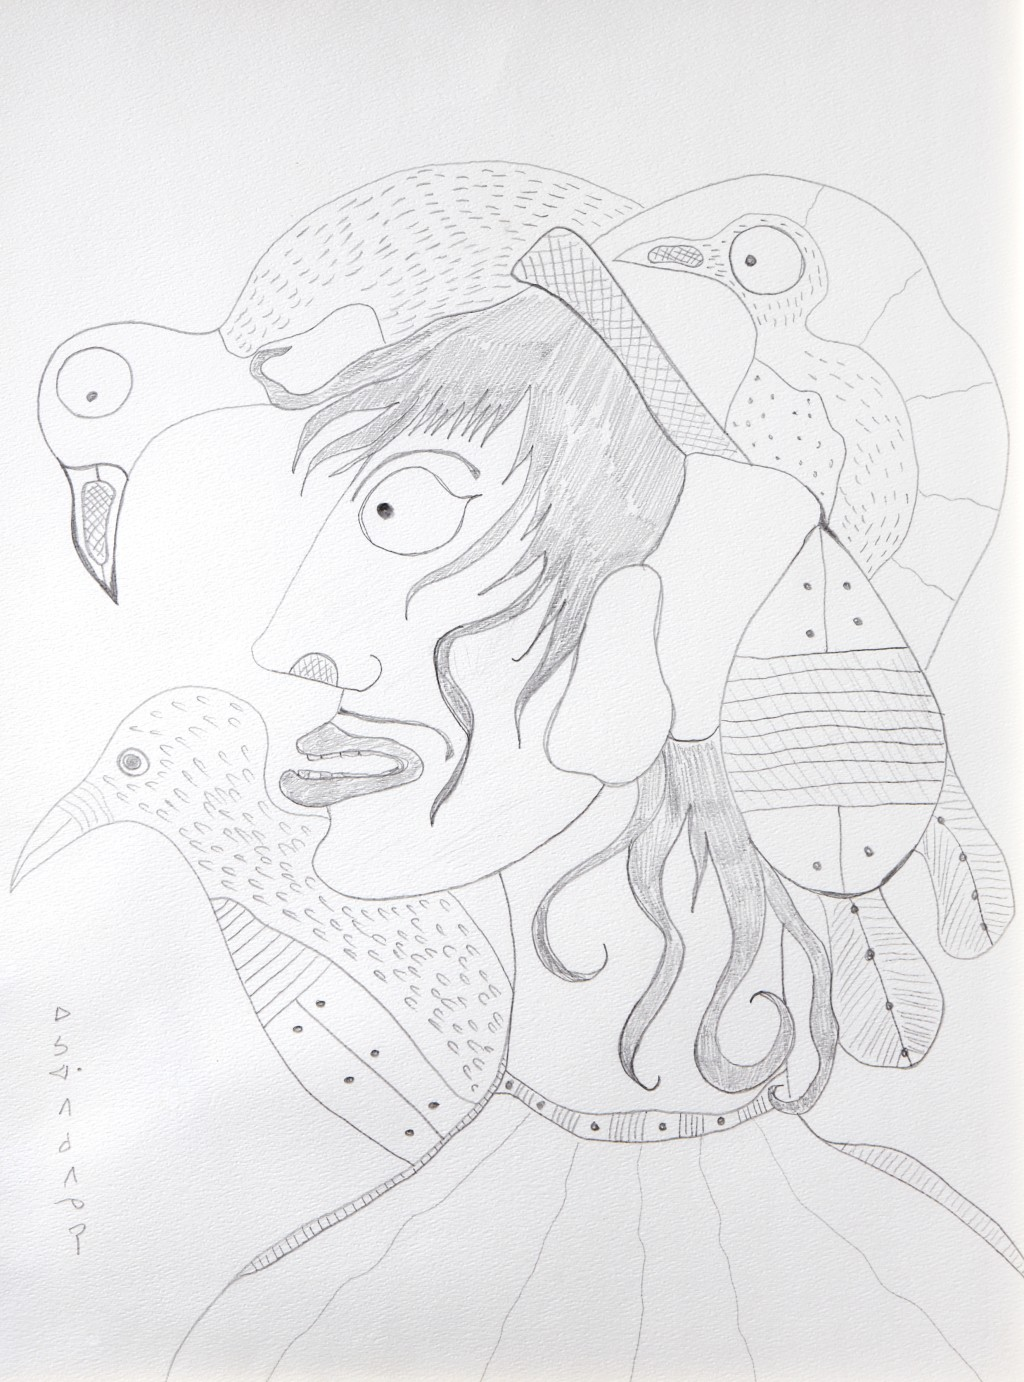 Drawing of a self-portrait by Morrisseau